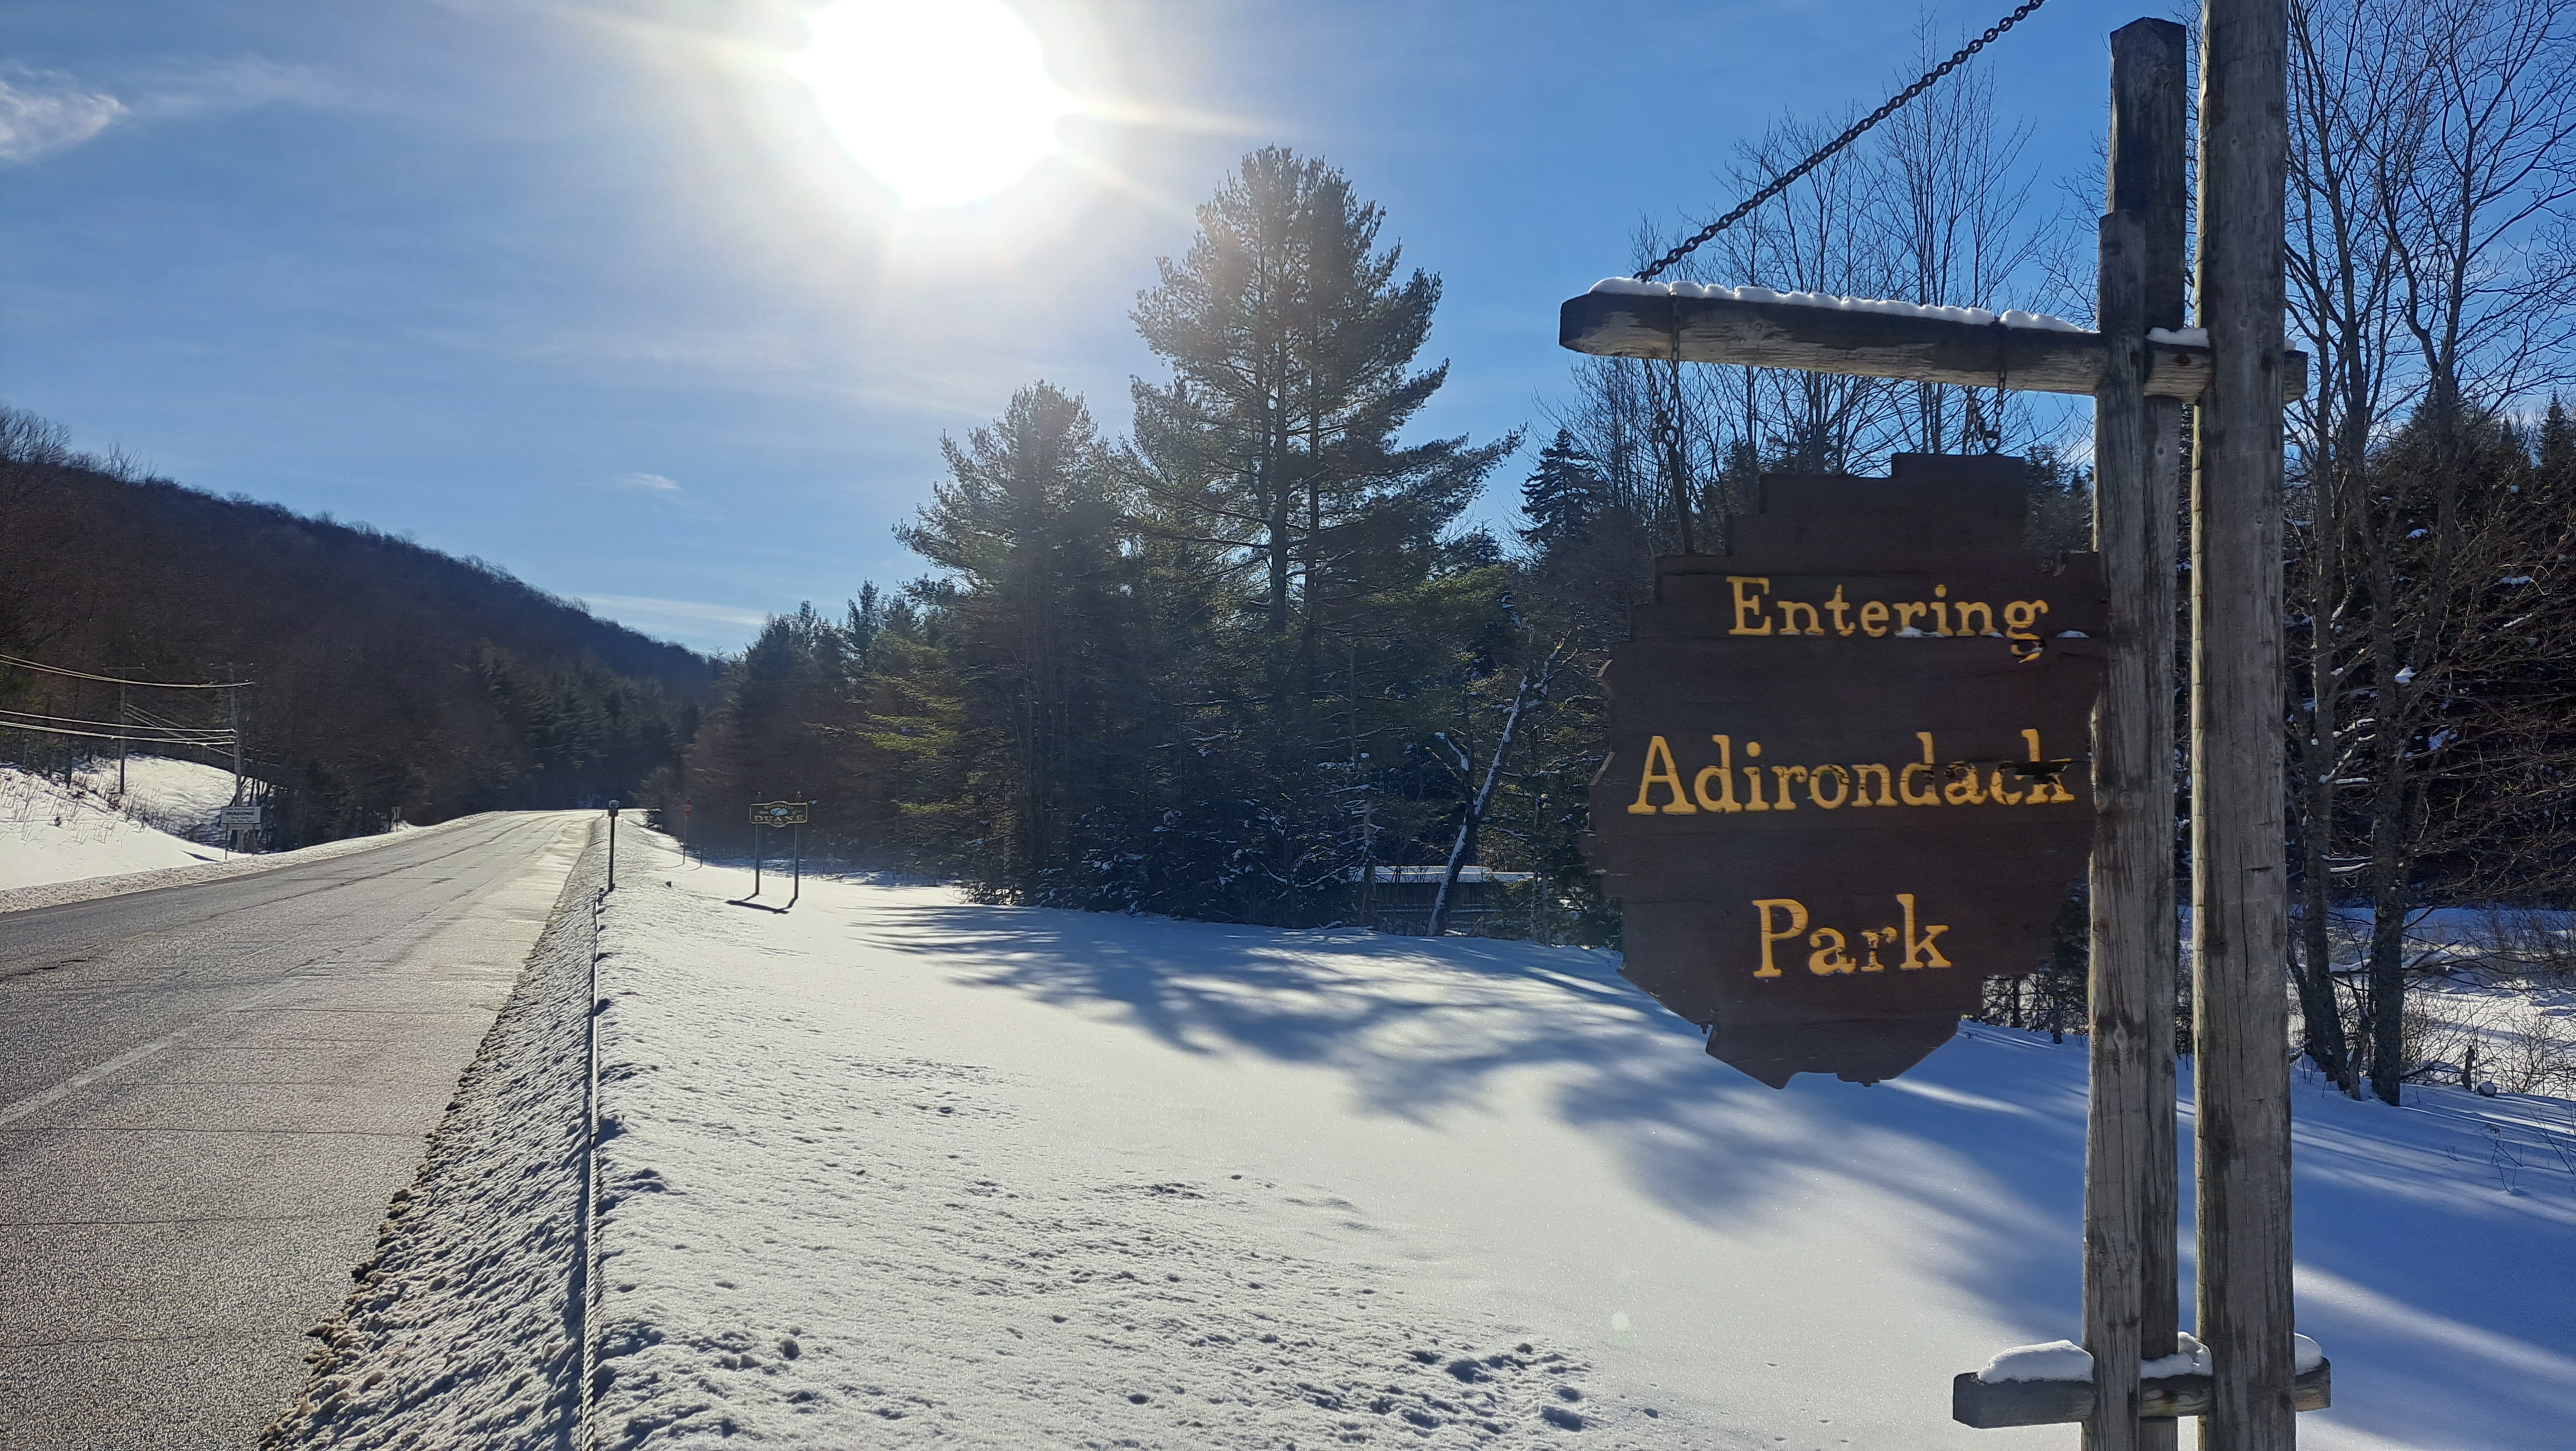 Boundaries of the Adirondack Park